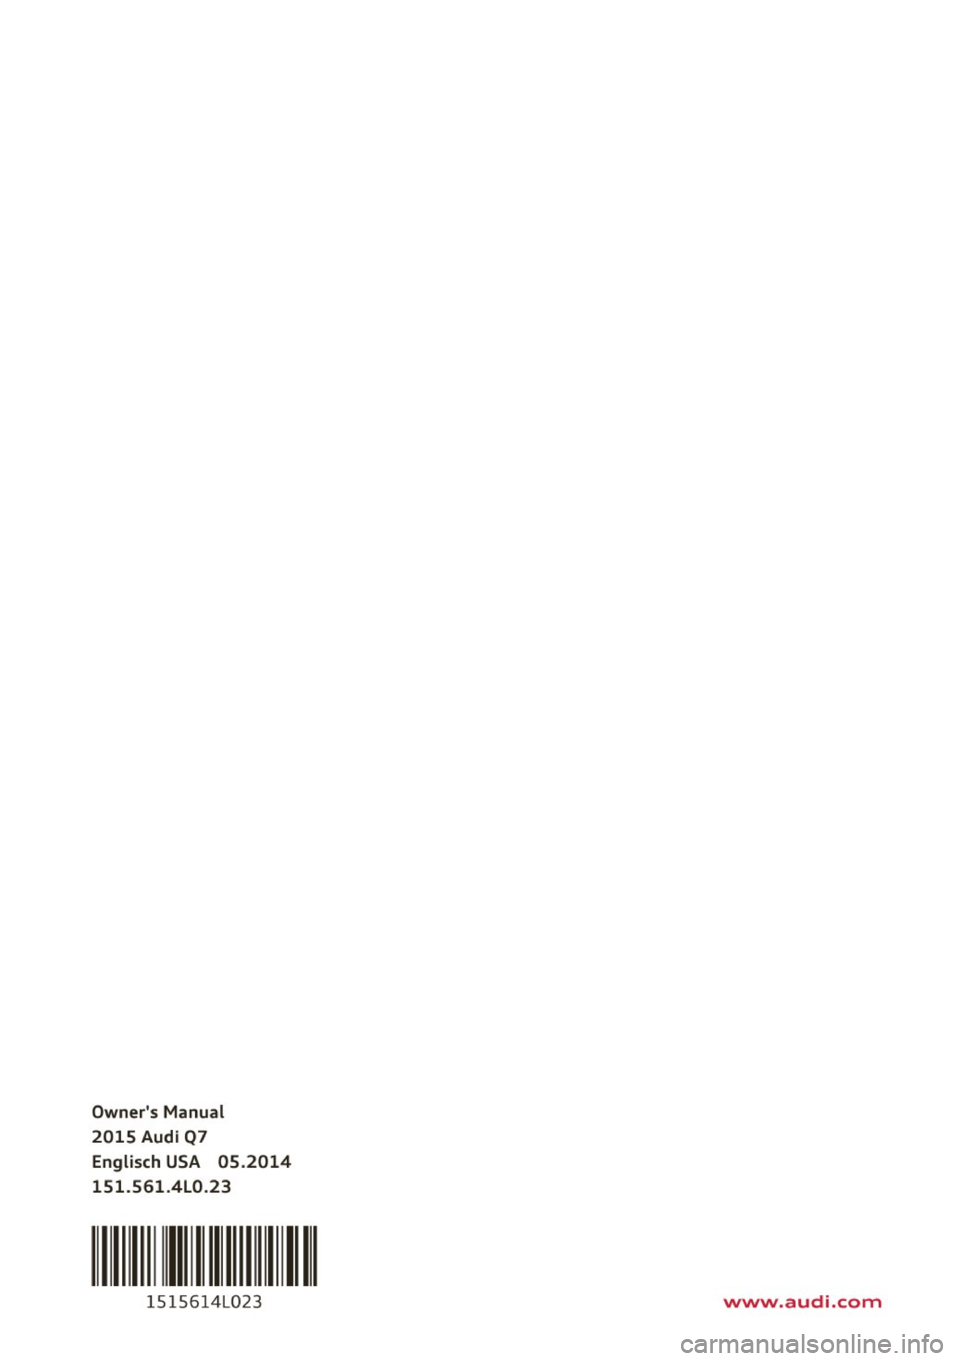 AUDI Q7 2015  Owner´s Manual Owners Manual 
2015  Audi  Q7  Englis ch  USA  05 .2014 
151 .5 6 1.4L0 .23 
111 1111111111 
1515614L0 23 www.audi.com  